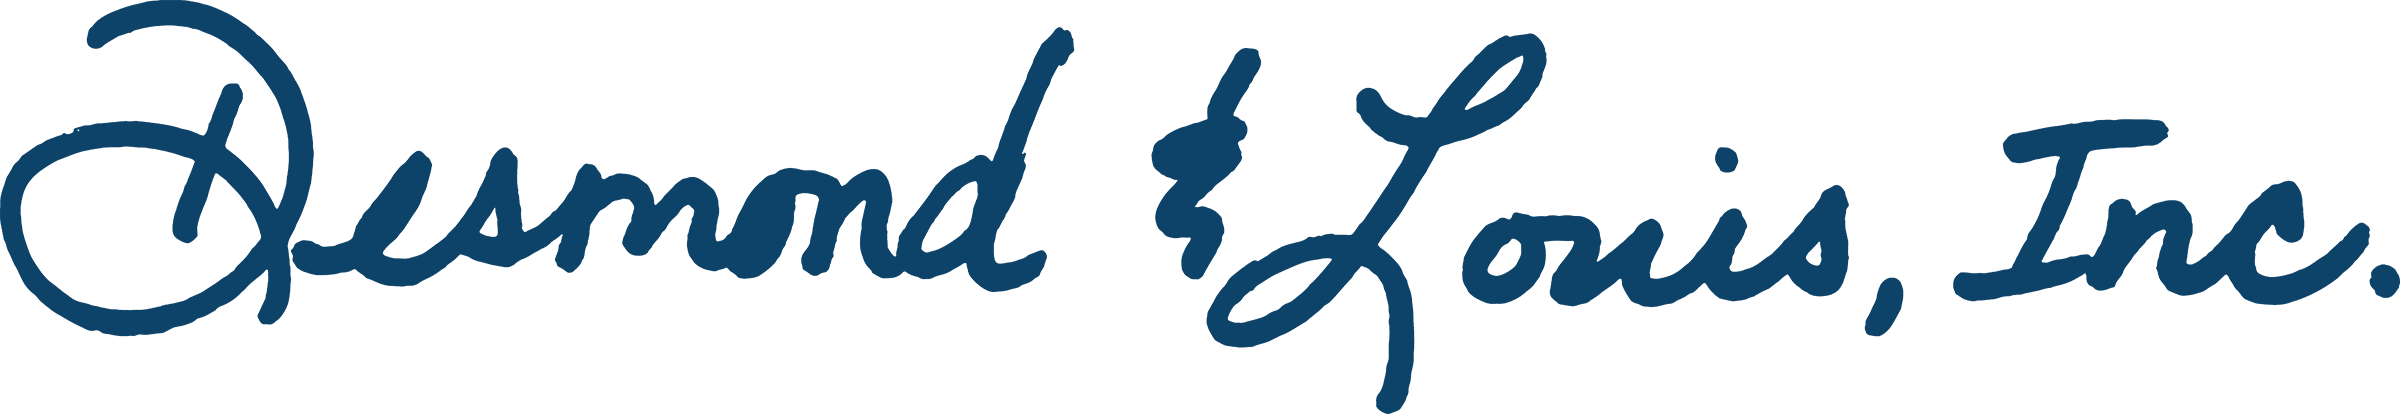 16_HPC_D&L_Logo_Blue.png